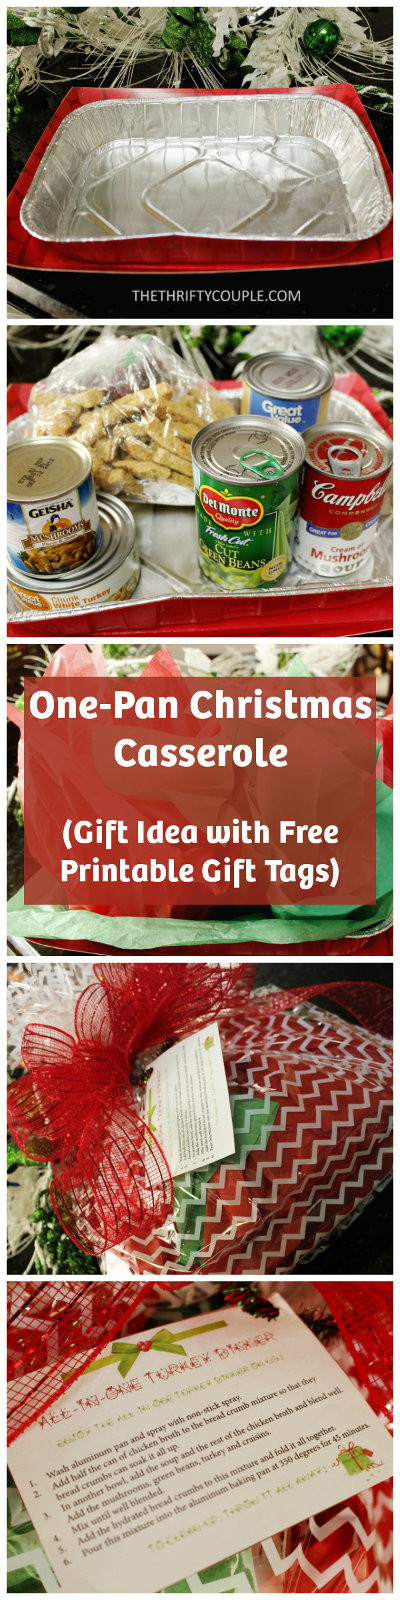 christmas-casserole-gift-idea-free-tags-printable-recipe